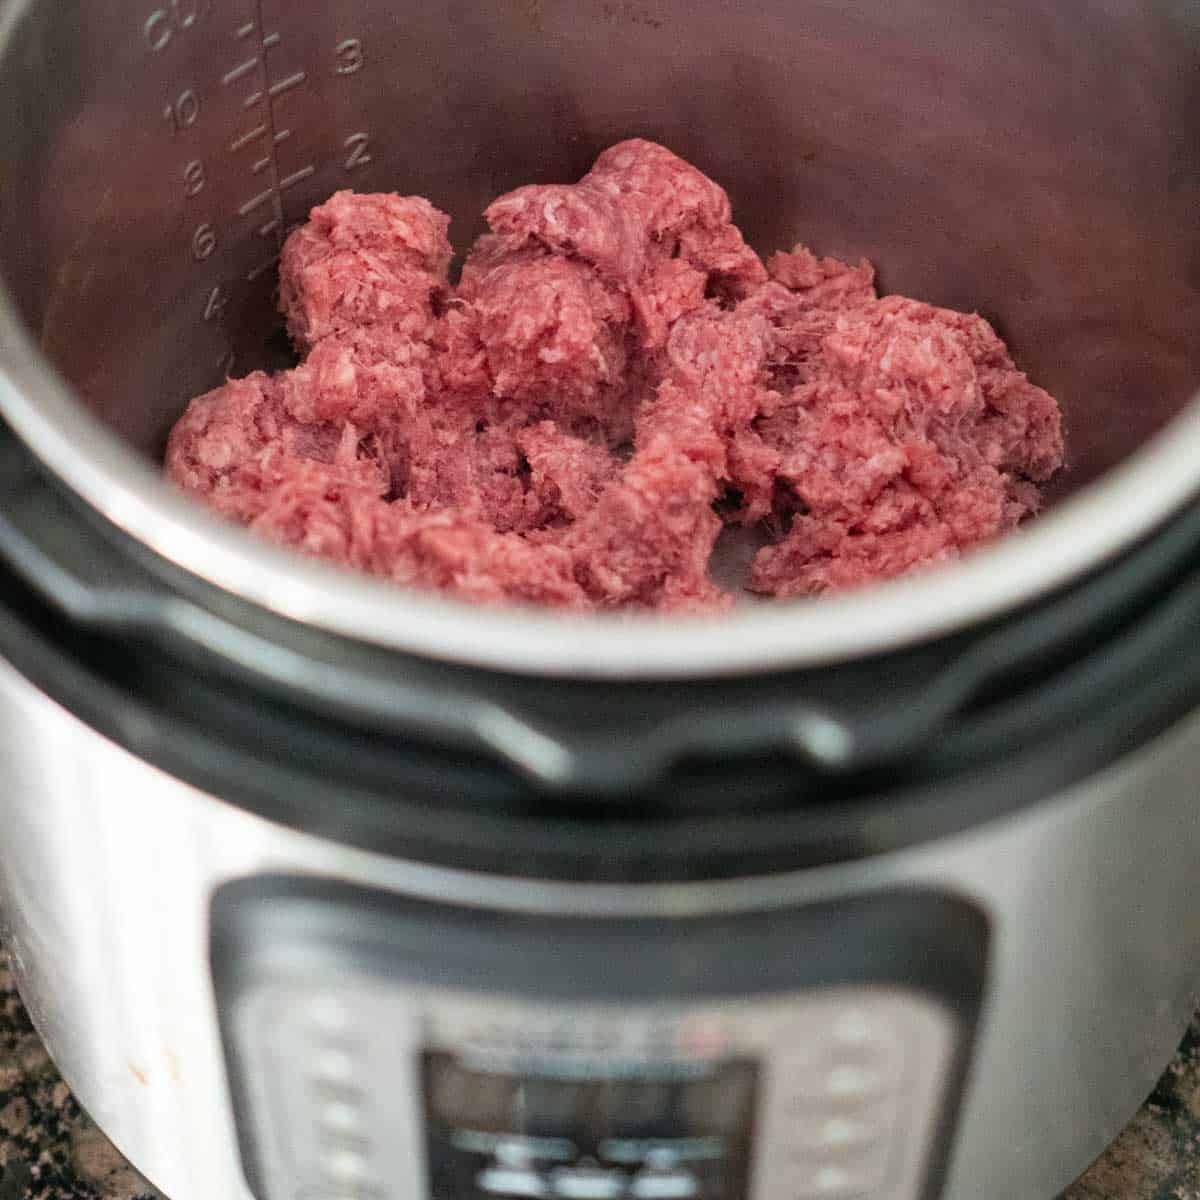 https://www.shakentogetherlife.com/wp-content/uploads/2023/01/how-to-cook-ground-beef-in-instant-pot.jpg